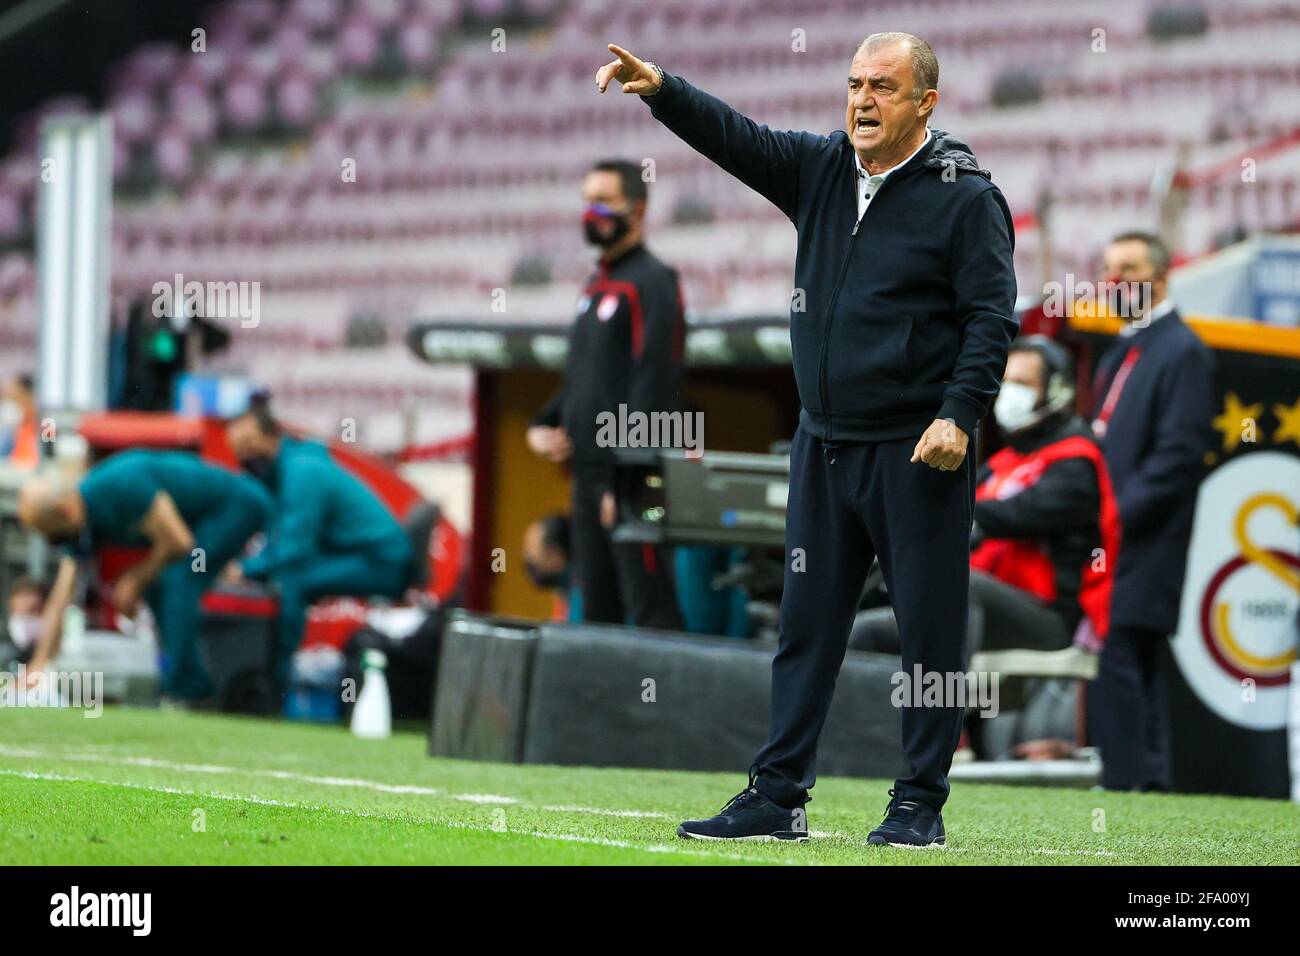 ISTANBUL, TURKEY - APRIL 21: Coach Fatih Terim of Galatasaray during the  Super Lig match between Galatasaray